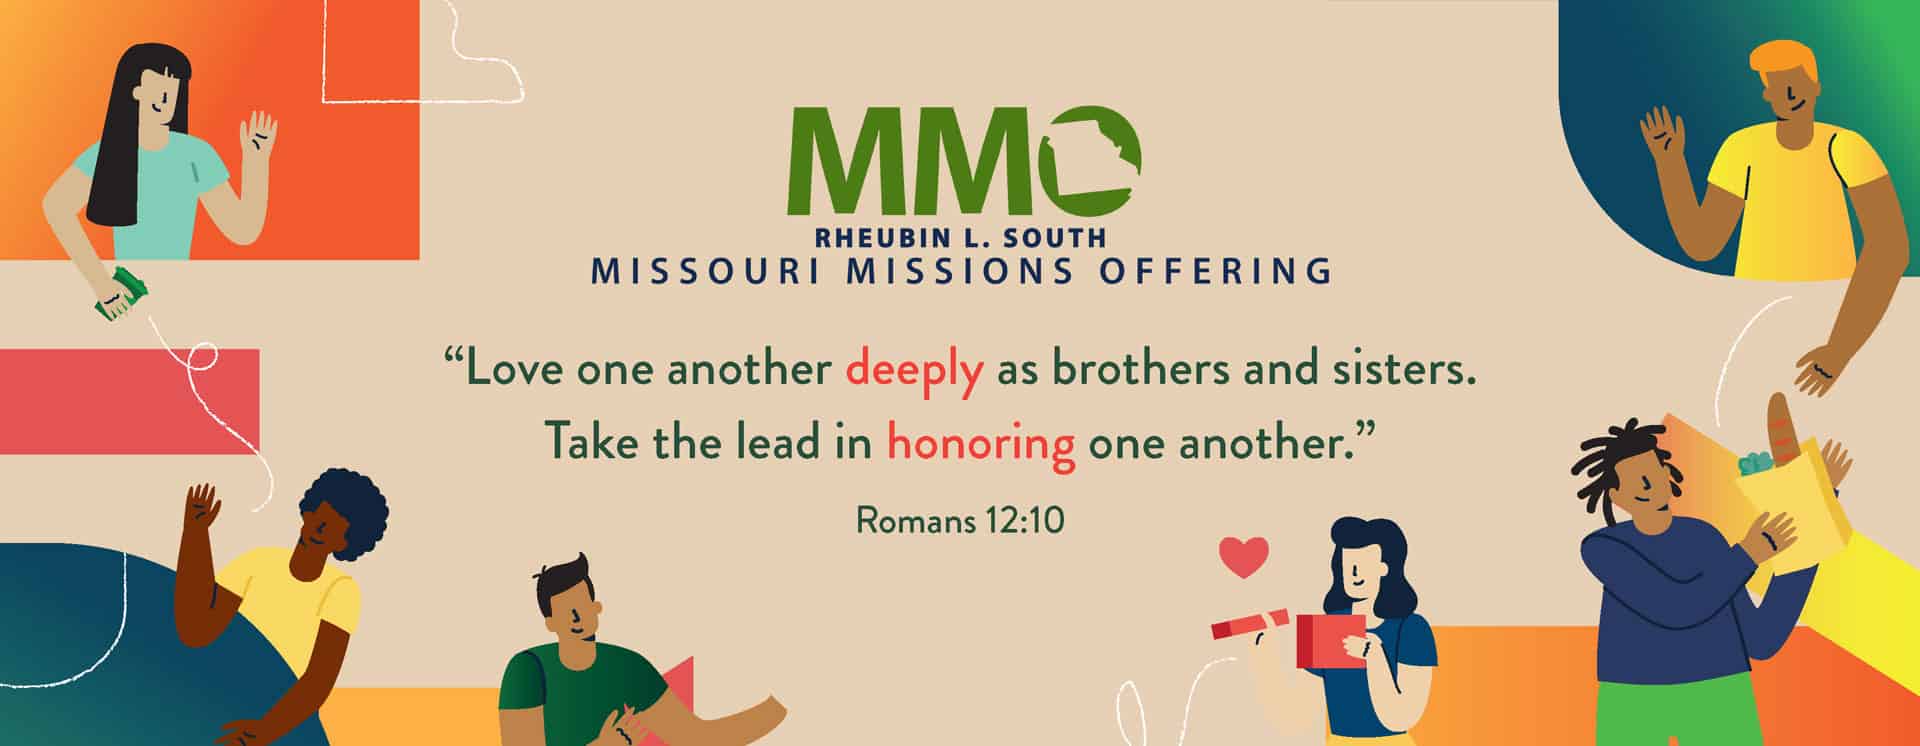 Missouri Missions Offering Missouri Baptist Convention